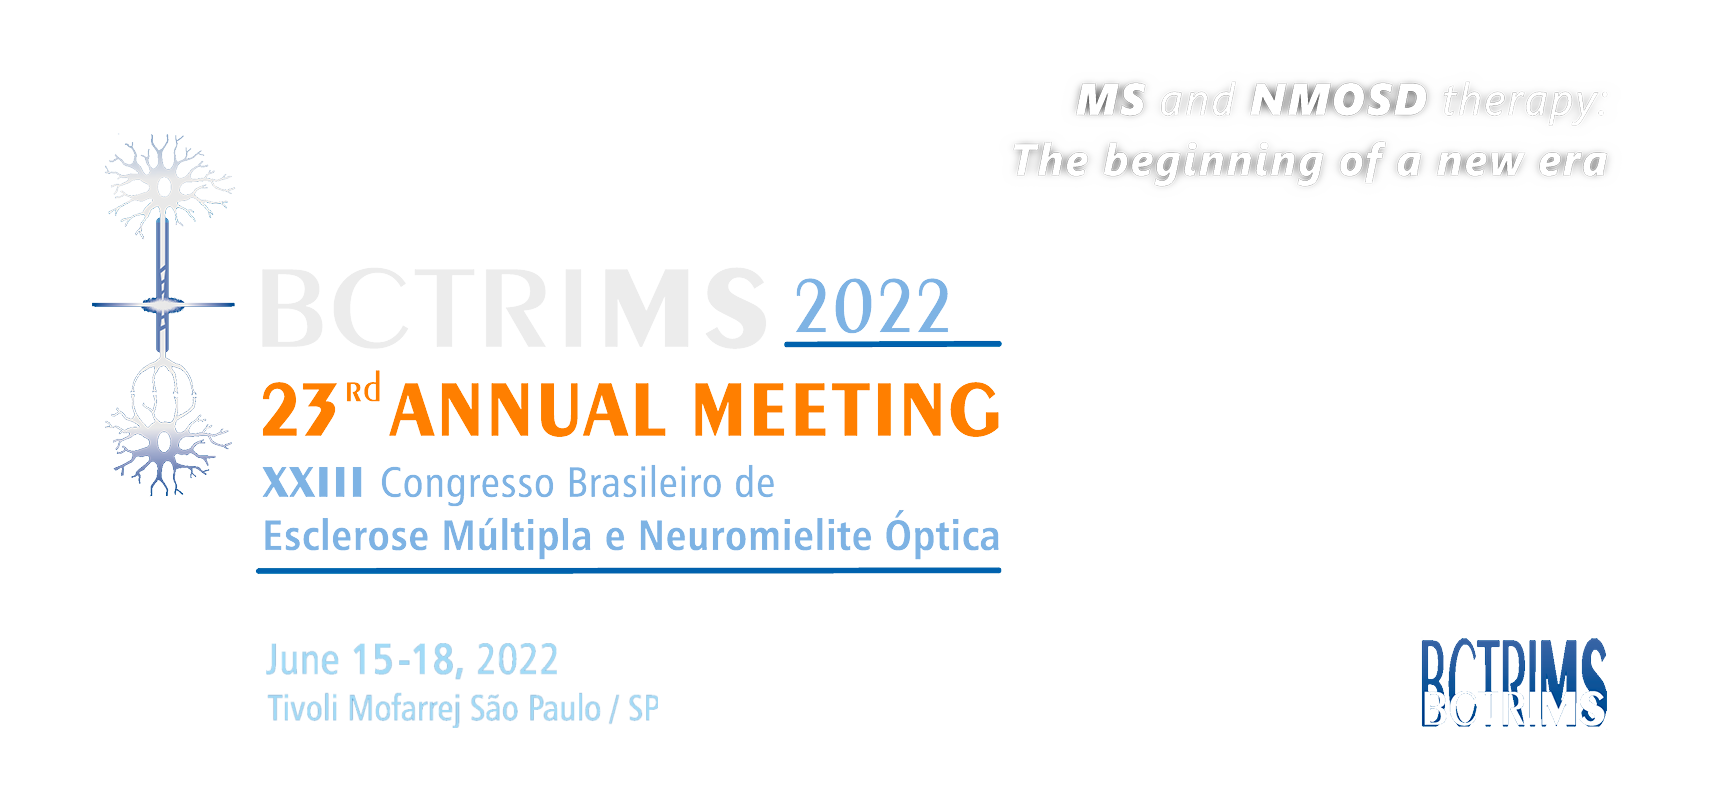 XXII Congresso Brasileiro de Esclerose Múltipla e Neuromielite Óptica